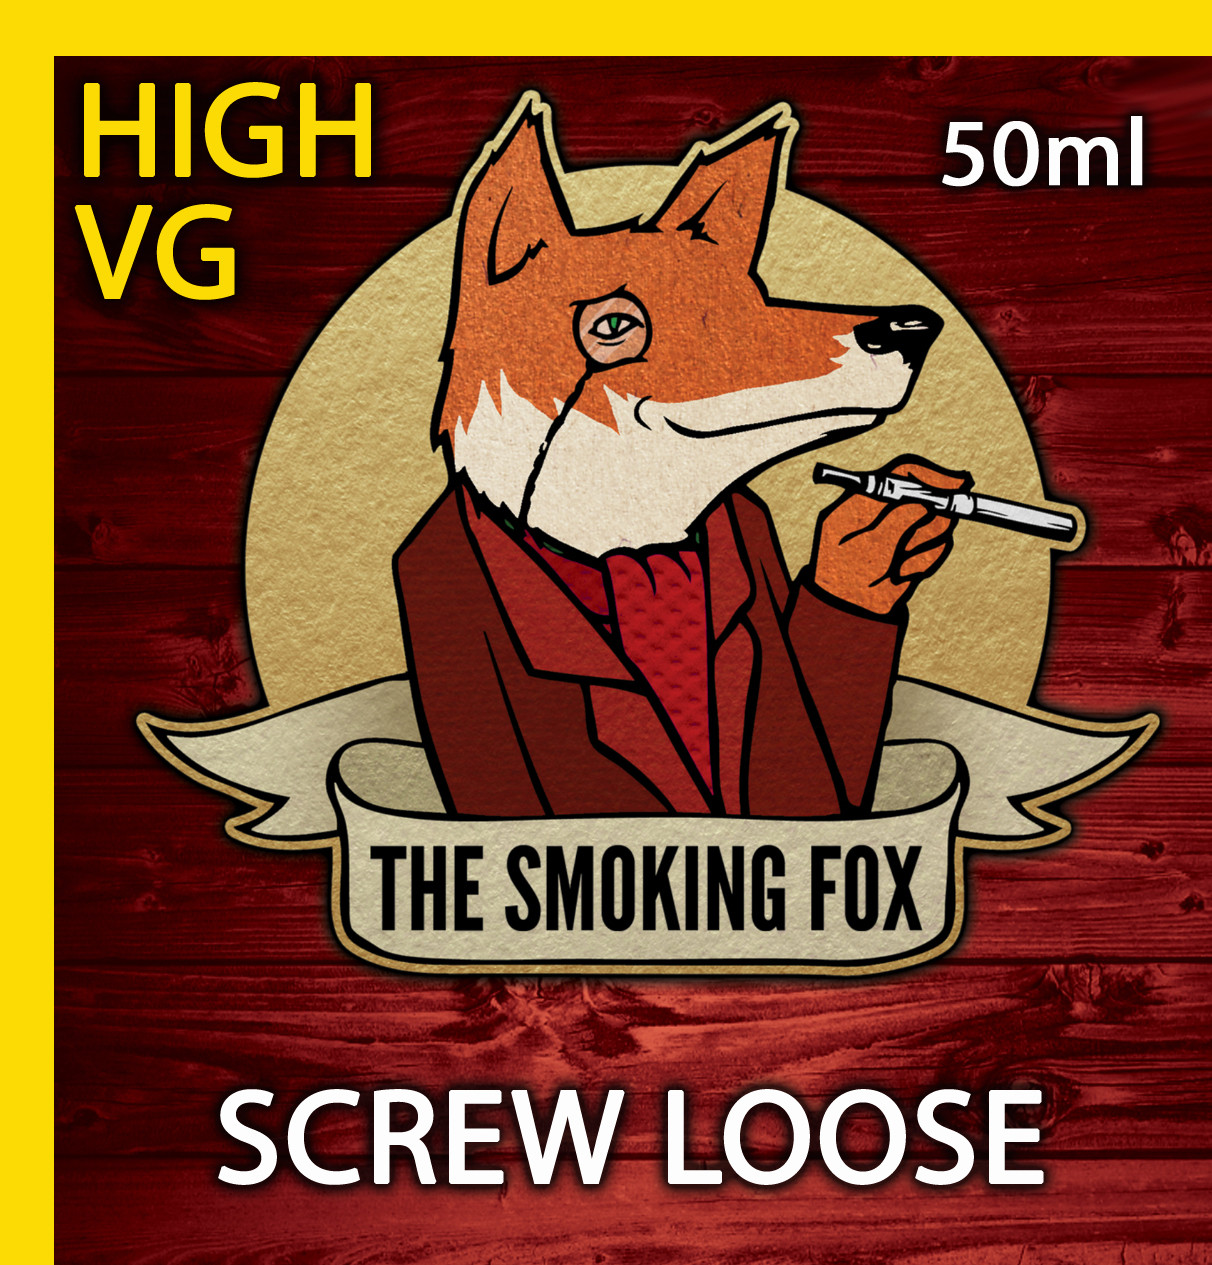 THE SMOKING FOX 50ml HIGH VG - SCREW LOOSE